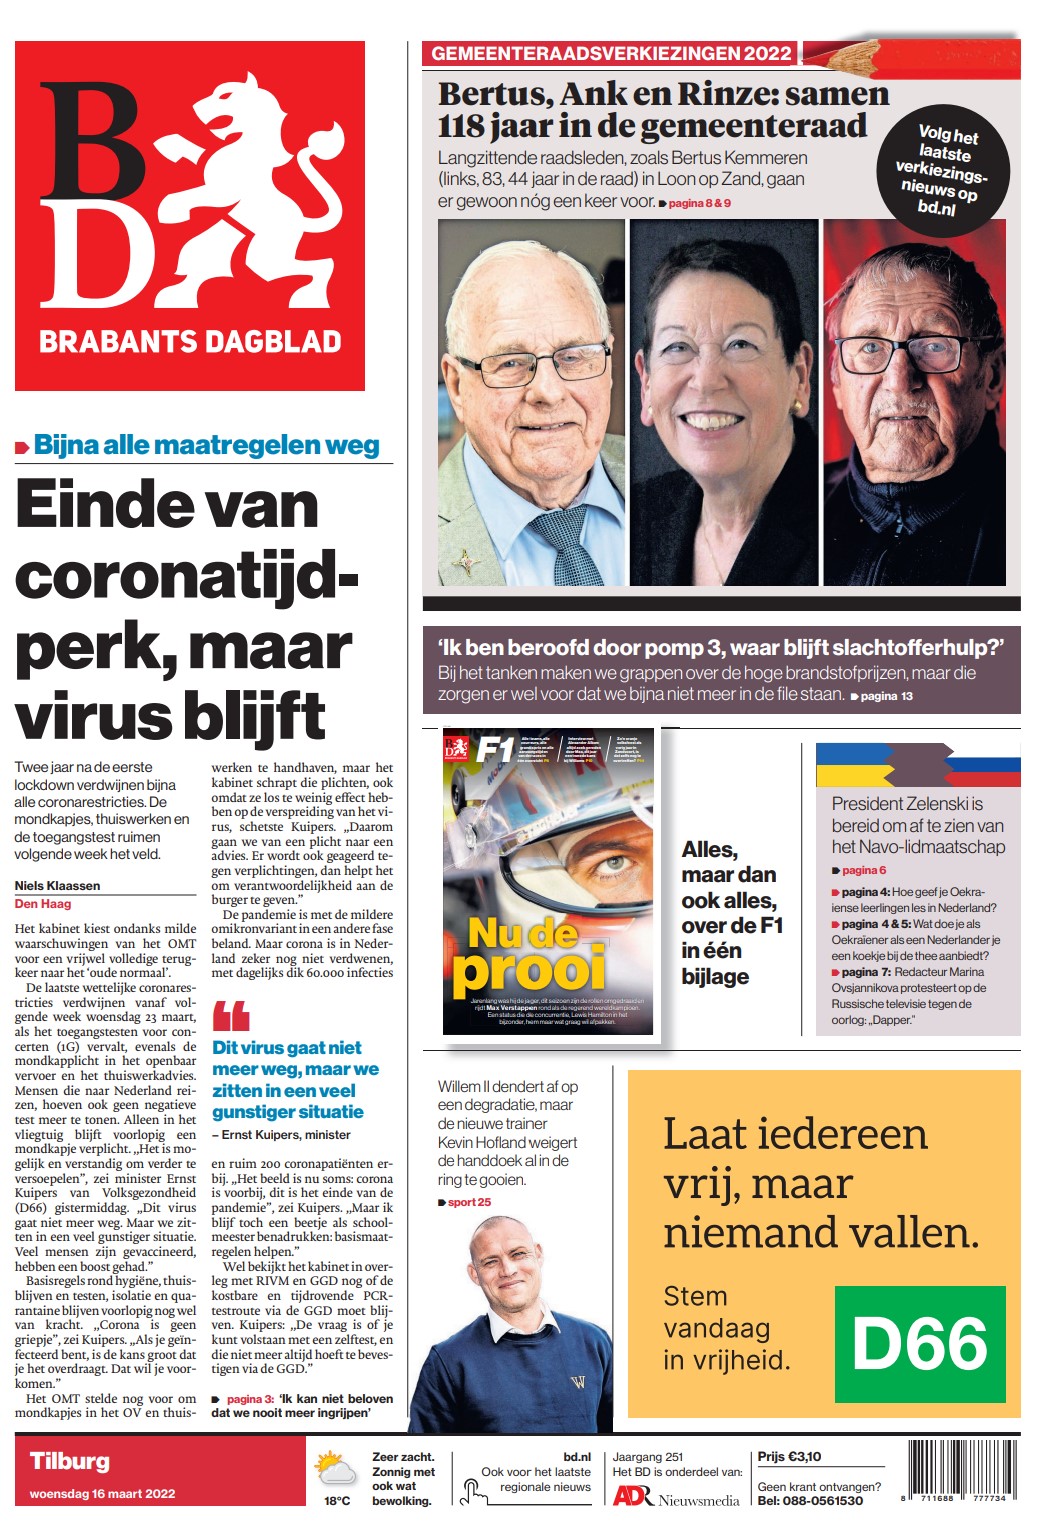 Brabants Dagblad regio Tilburg 16-03-2022 incl F1 bijlage